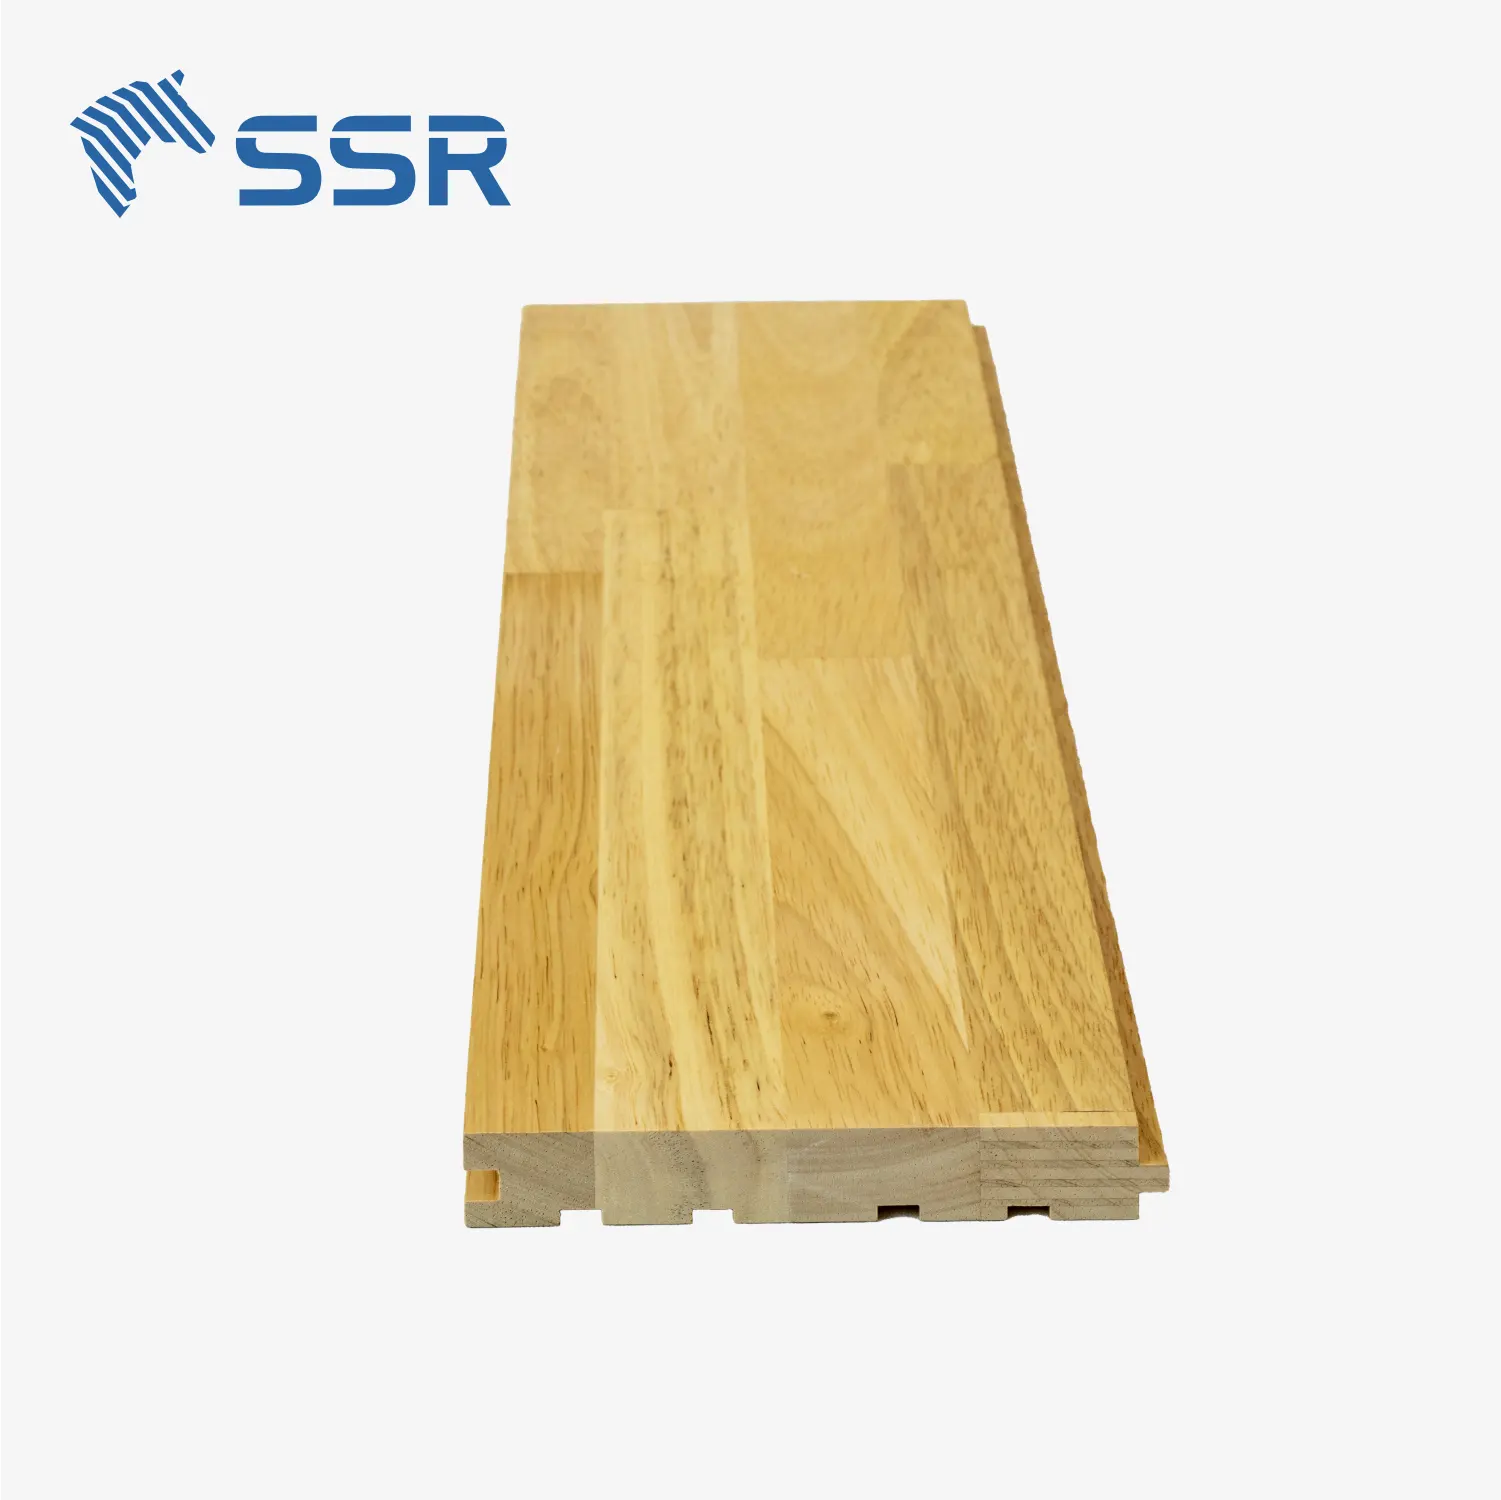 SSR VINA - Acacia/Rubberwood/Senna Siamea wood flooring - Laminated wood Flooring finger joint solid wood flooring